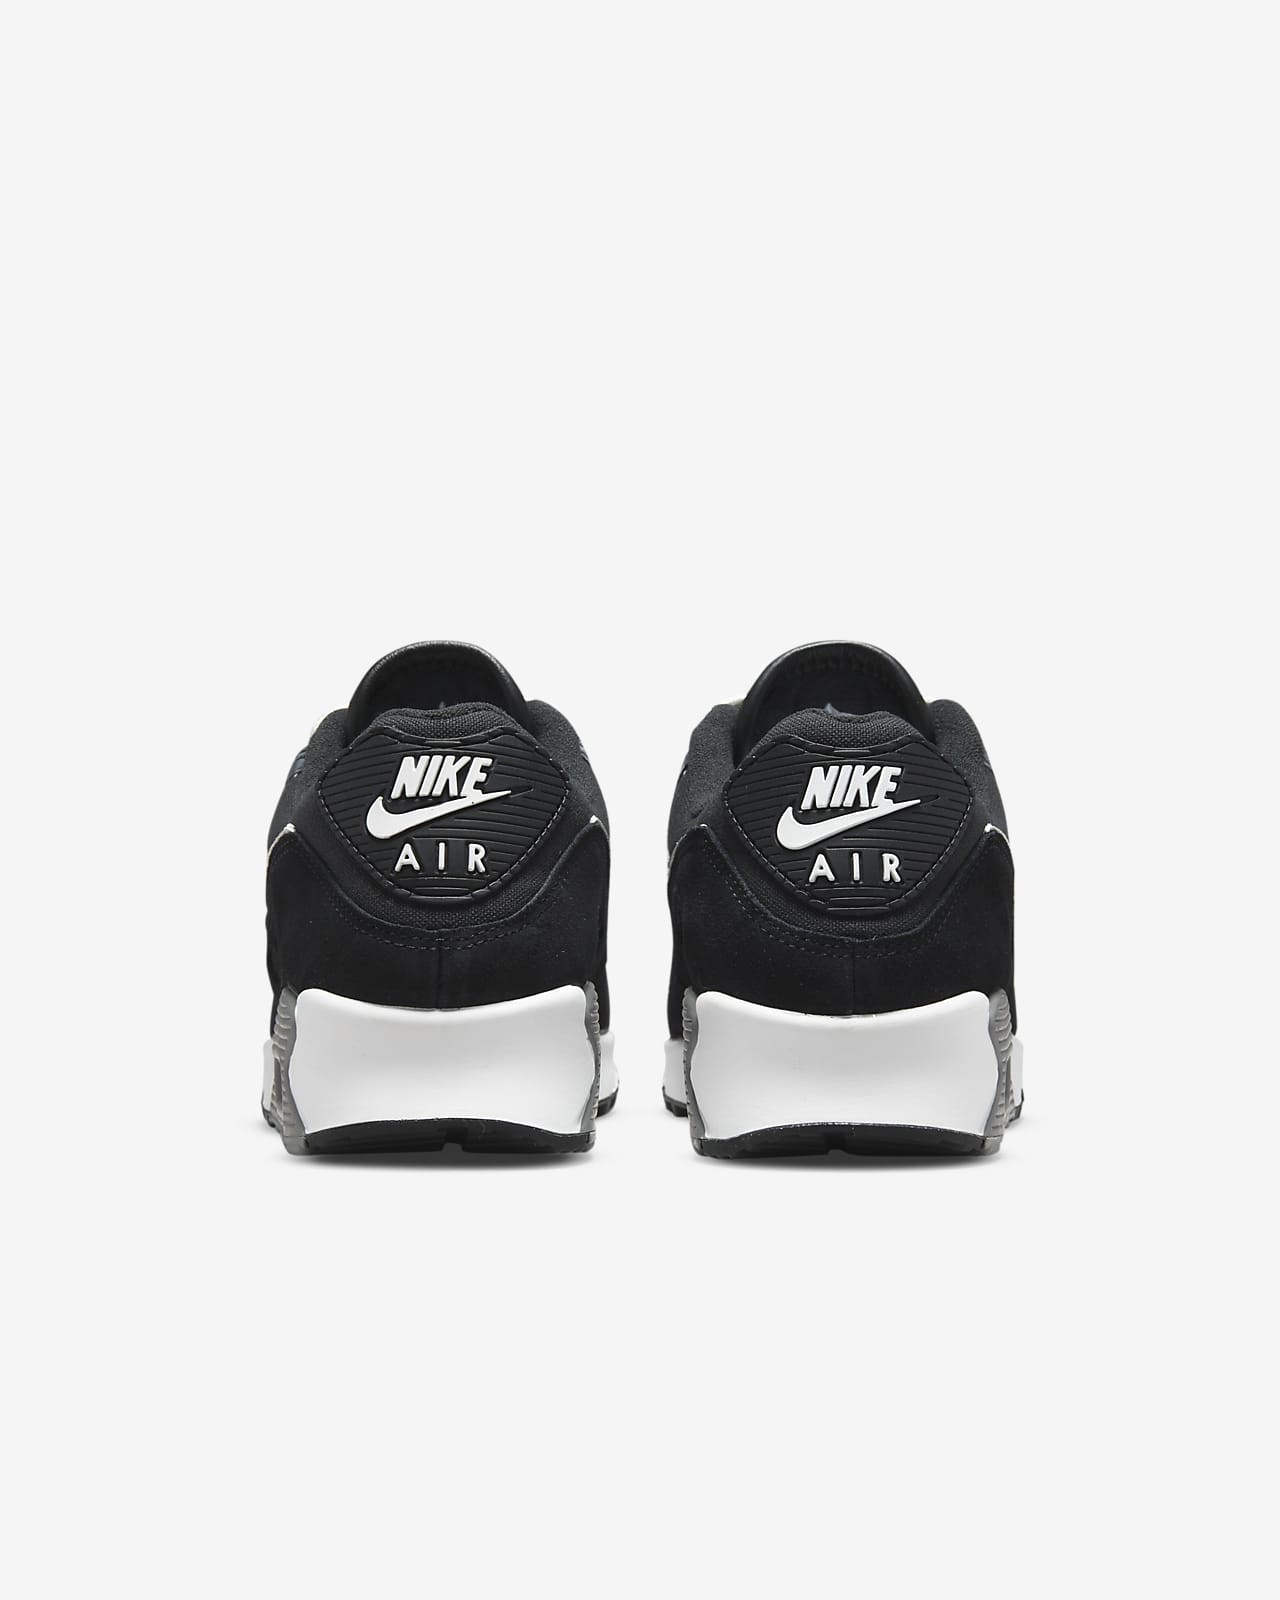 Nike Air Max 90 Premium Men's Shoes هومر سيمبسون